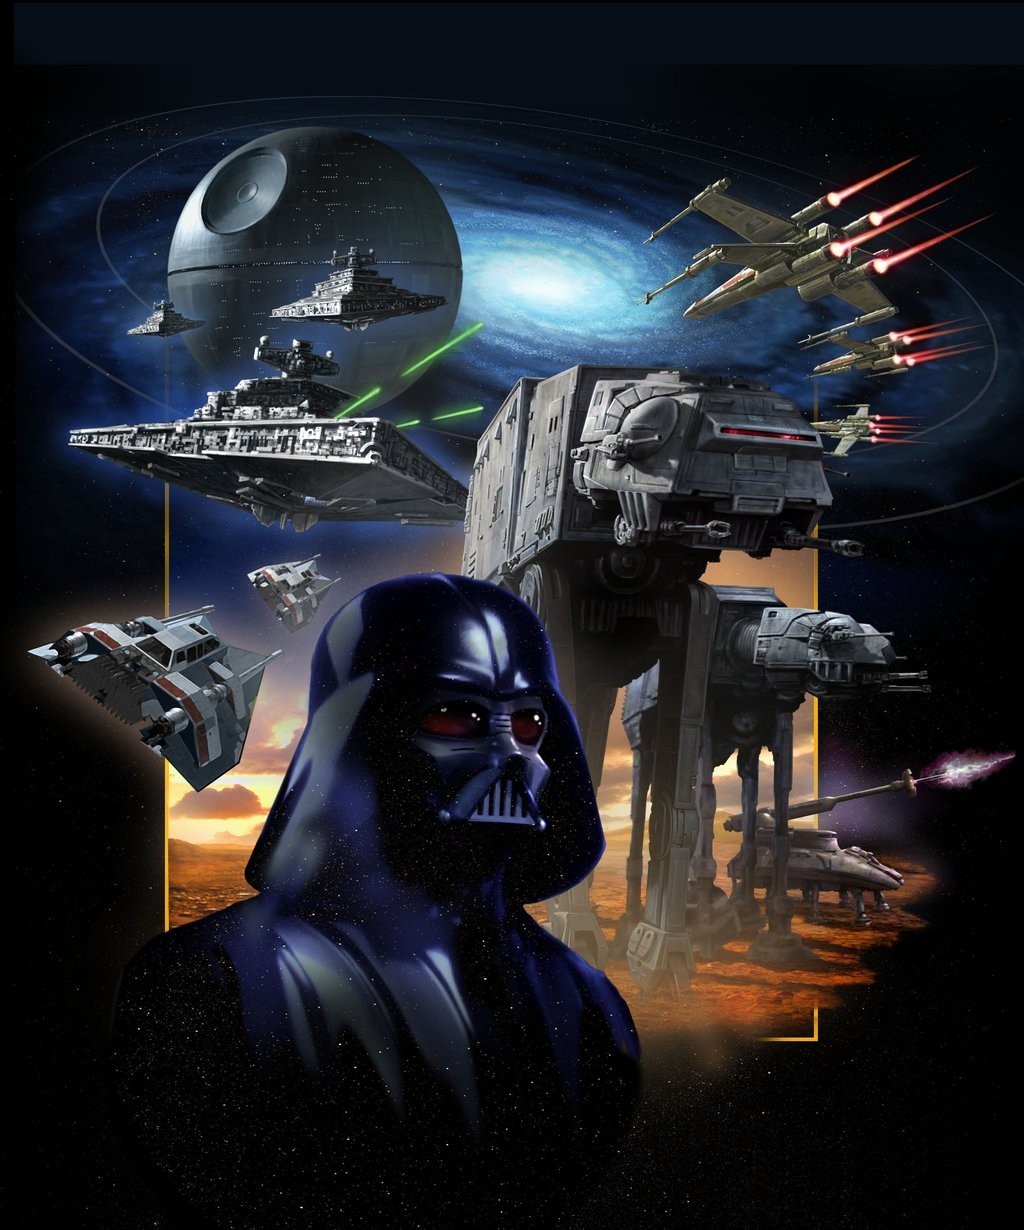 star wars empire at war free download full